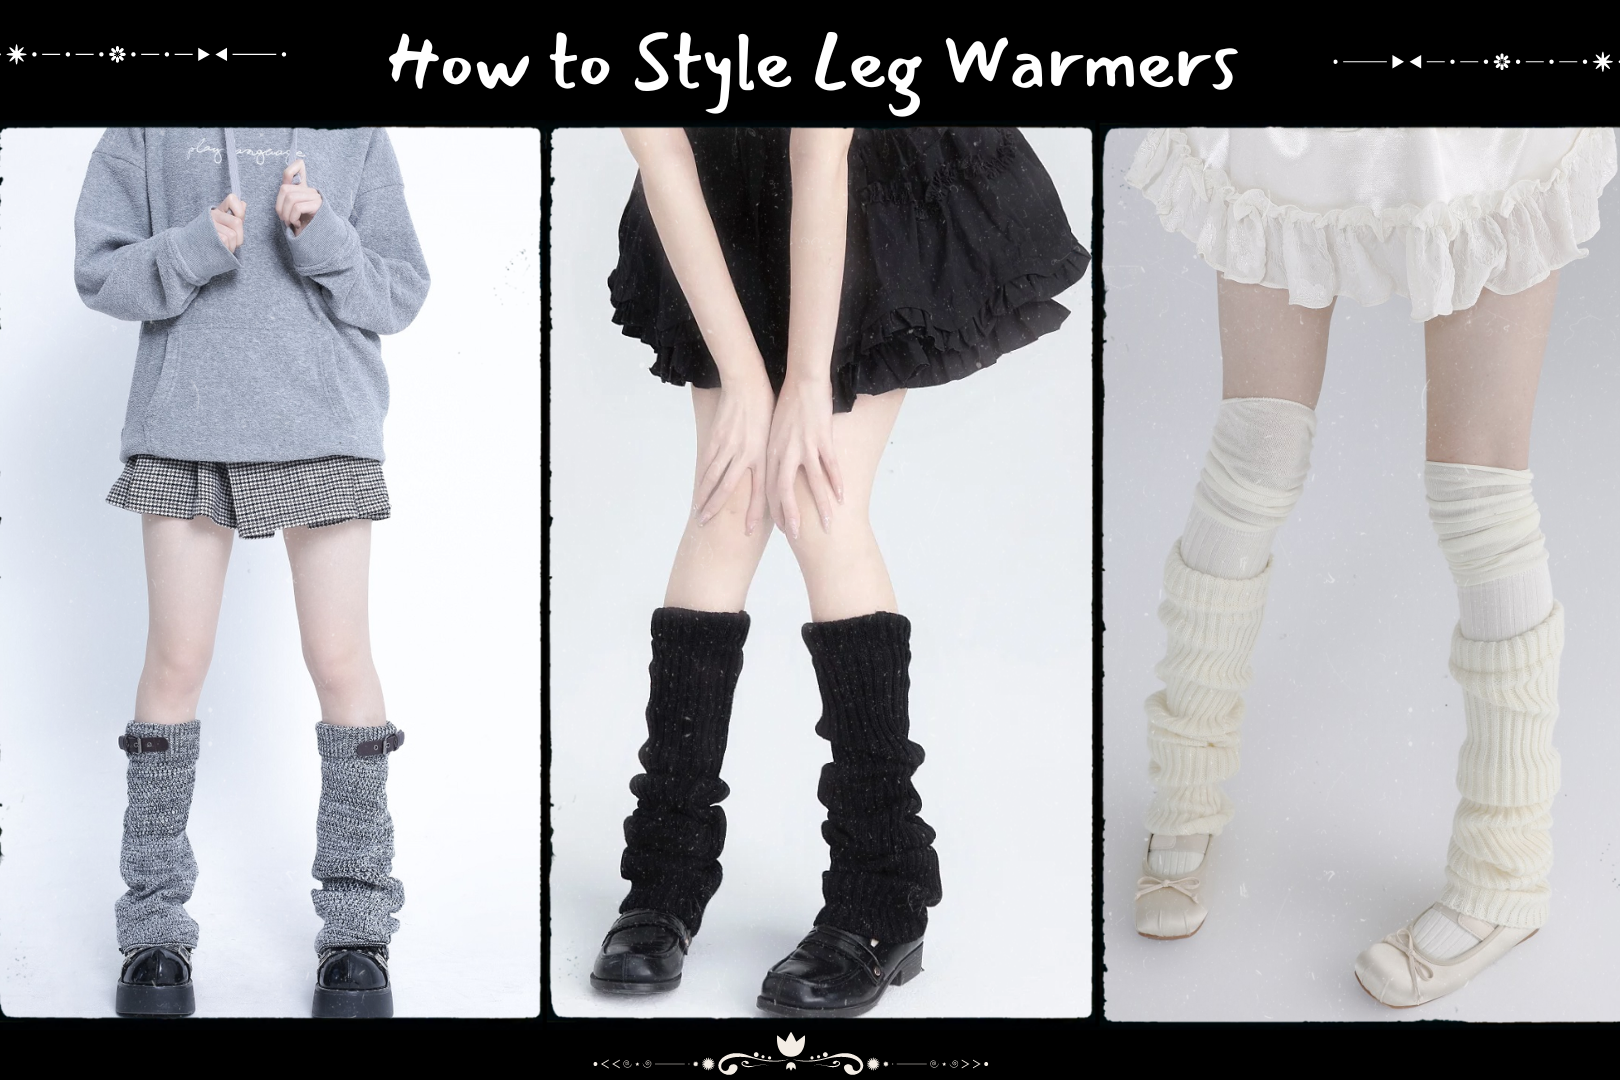 Wearing Leg Warmers, Fashion Style Guidance